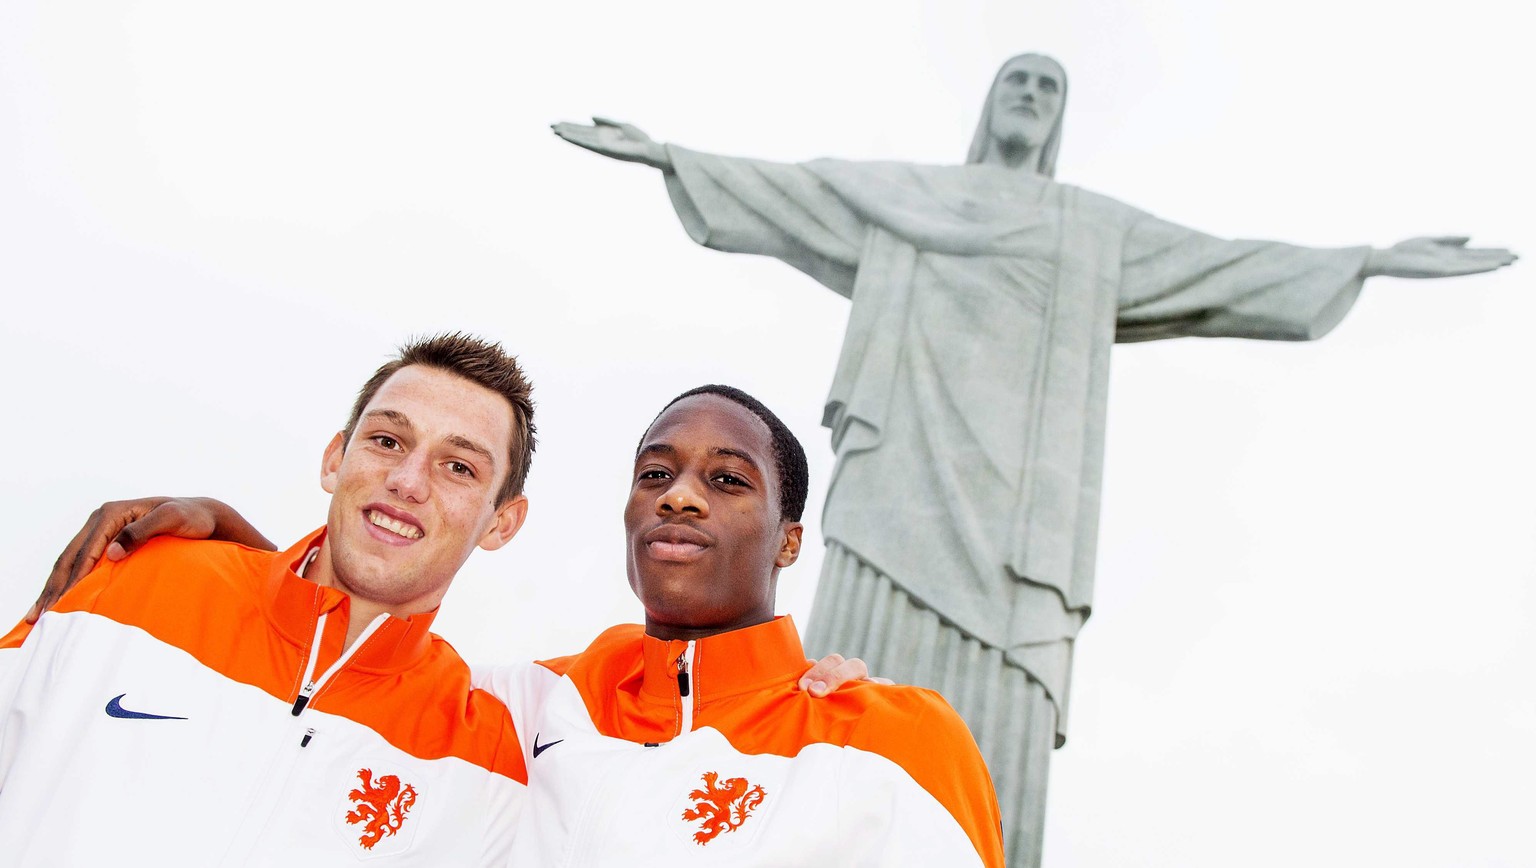 Terence Kongolo (rechts) und Nationalmannschaftskollege Stefan de Vrij posieren vor der Christus-Statue in Rio de Janeiro.